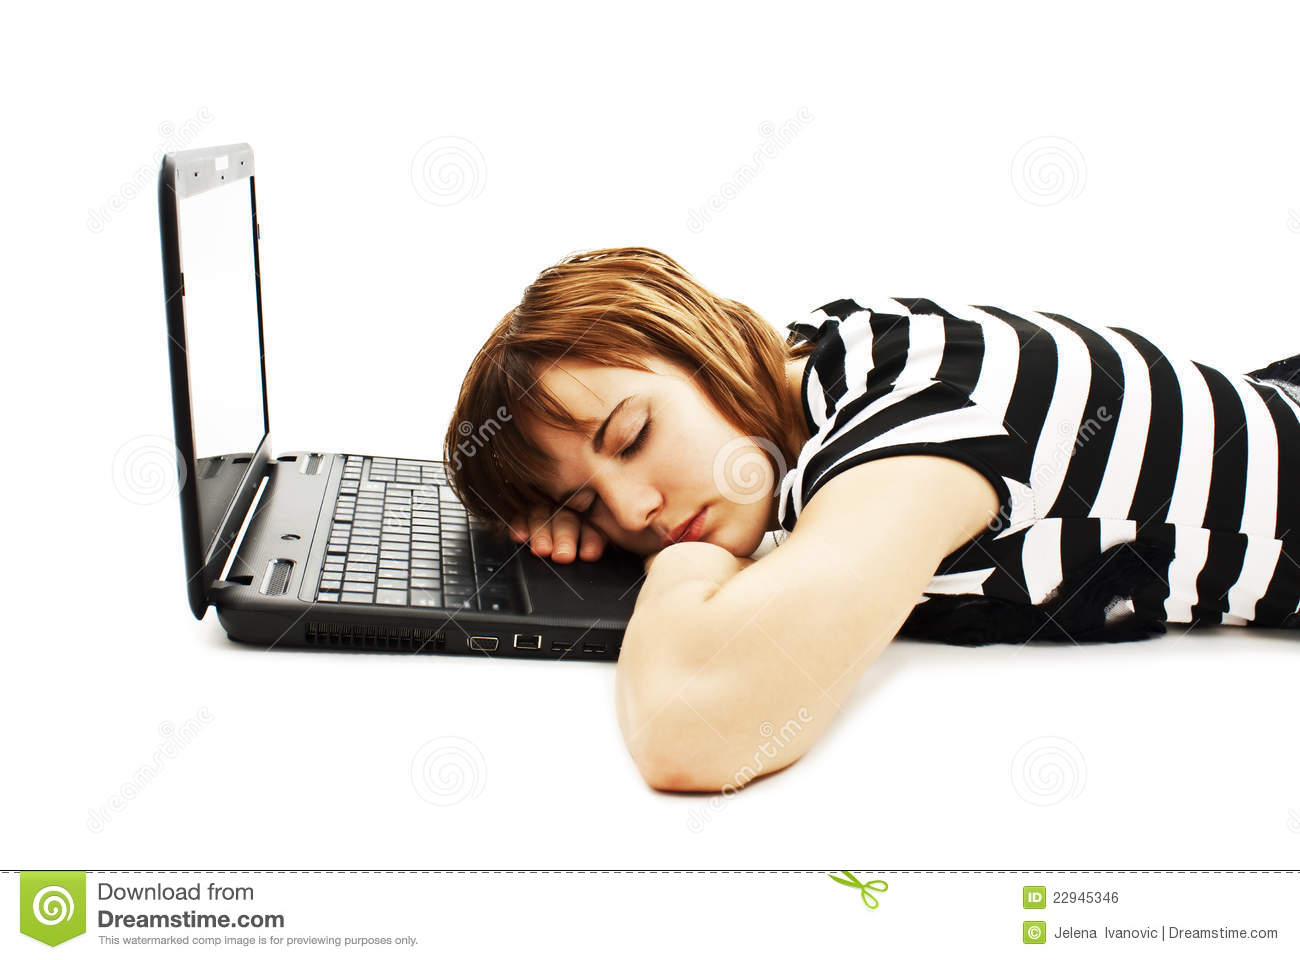 Cute Teenage Girl Sleeping On Her Laptop Computer Royalty Free Stock